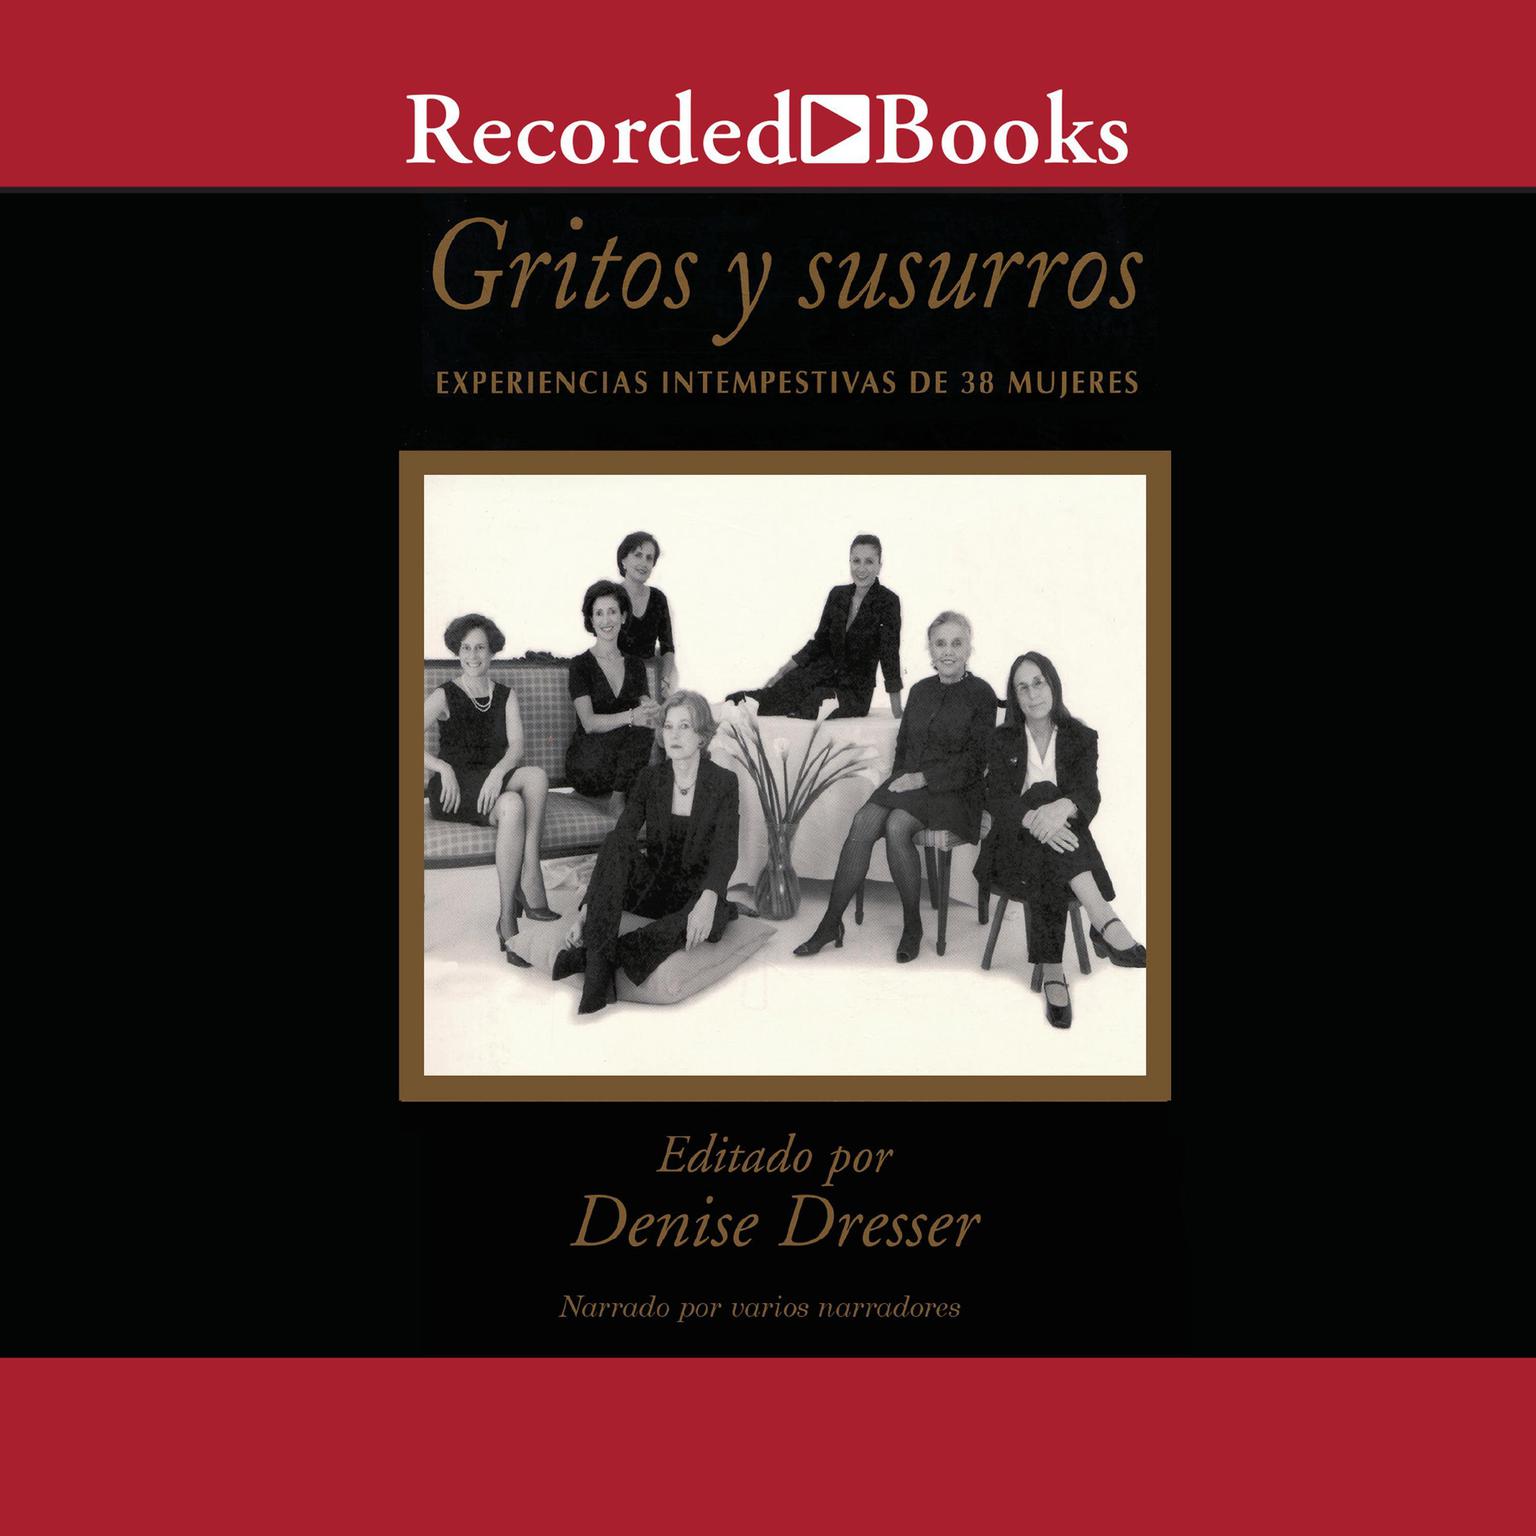 Gritos y susurros (Cries and Whispers): Experiencias intempestivas de 38 mujeres Audiobook, by Denise Dresser